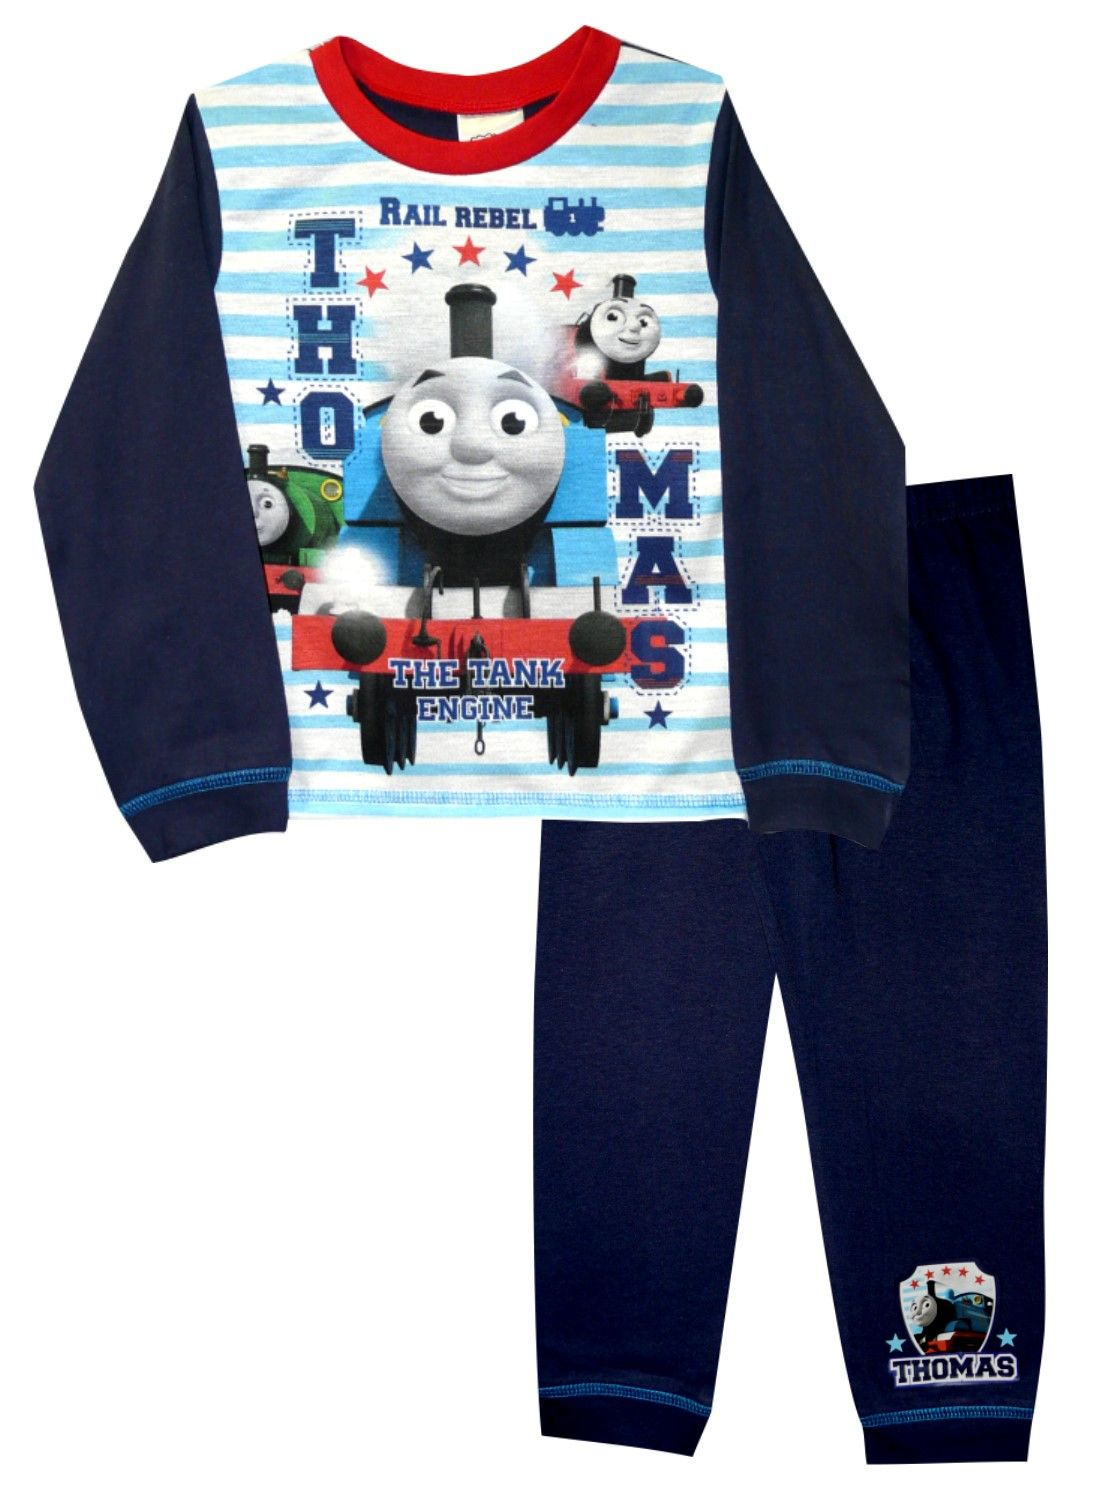 Thomas the Tank Engine "Rail Rebel" Boys Pyjamas - 18-24 Months